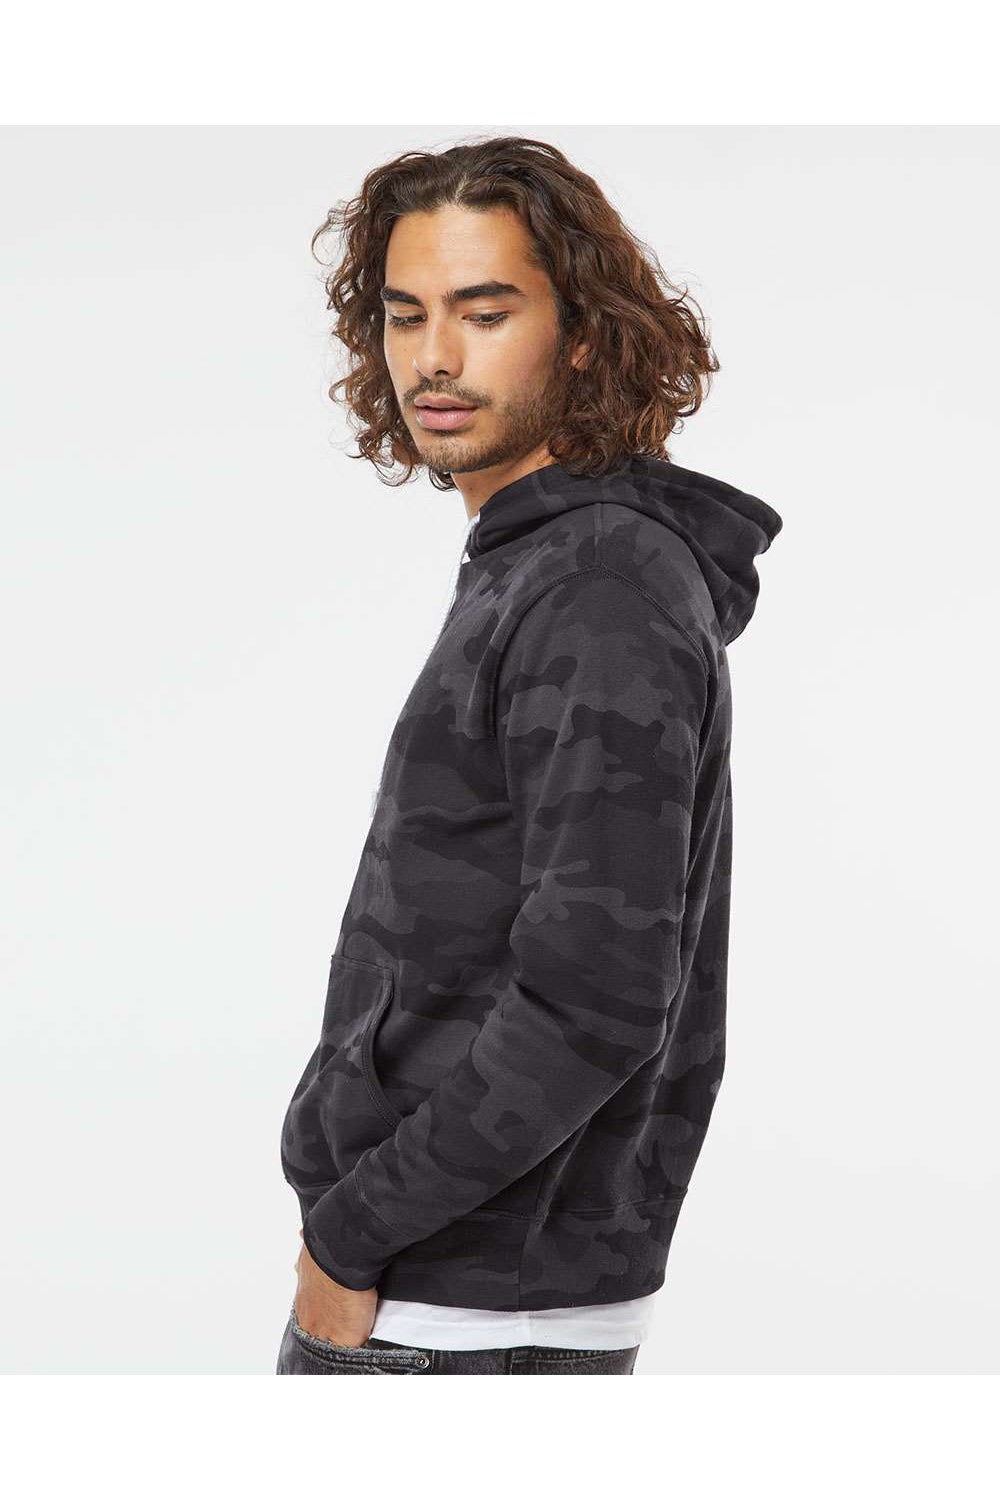 Independent Trading Co. AFX90UN Mens Hooded Sweatshirt Hoodie Black Camo Model Side